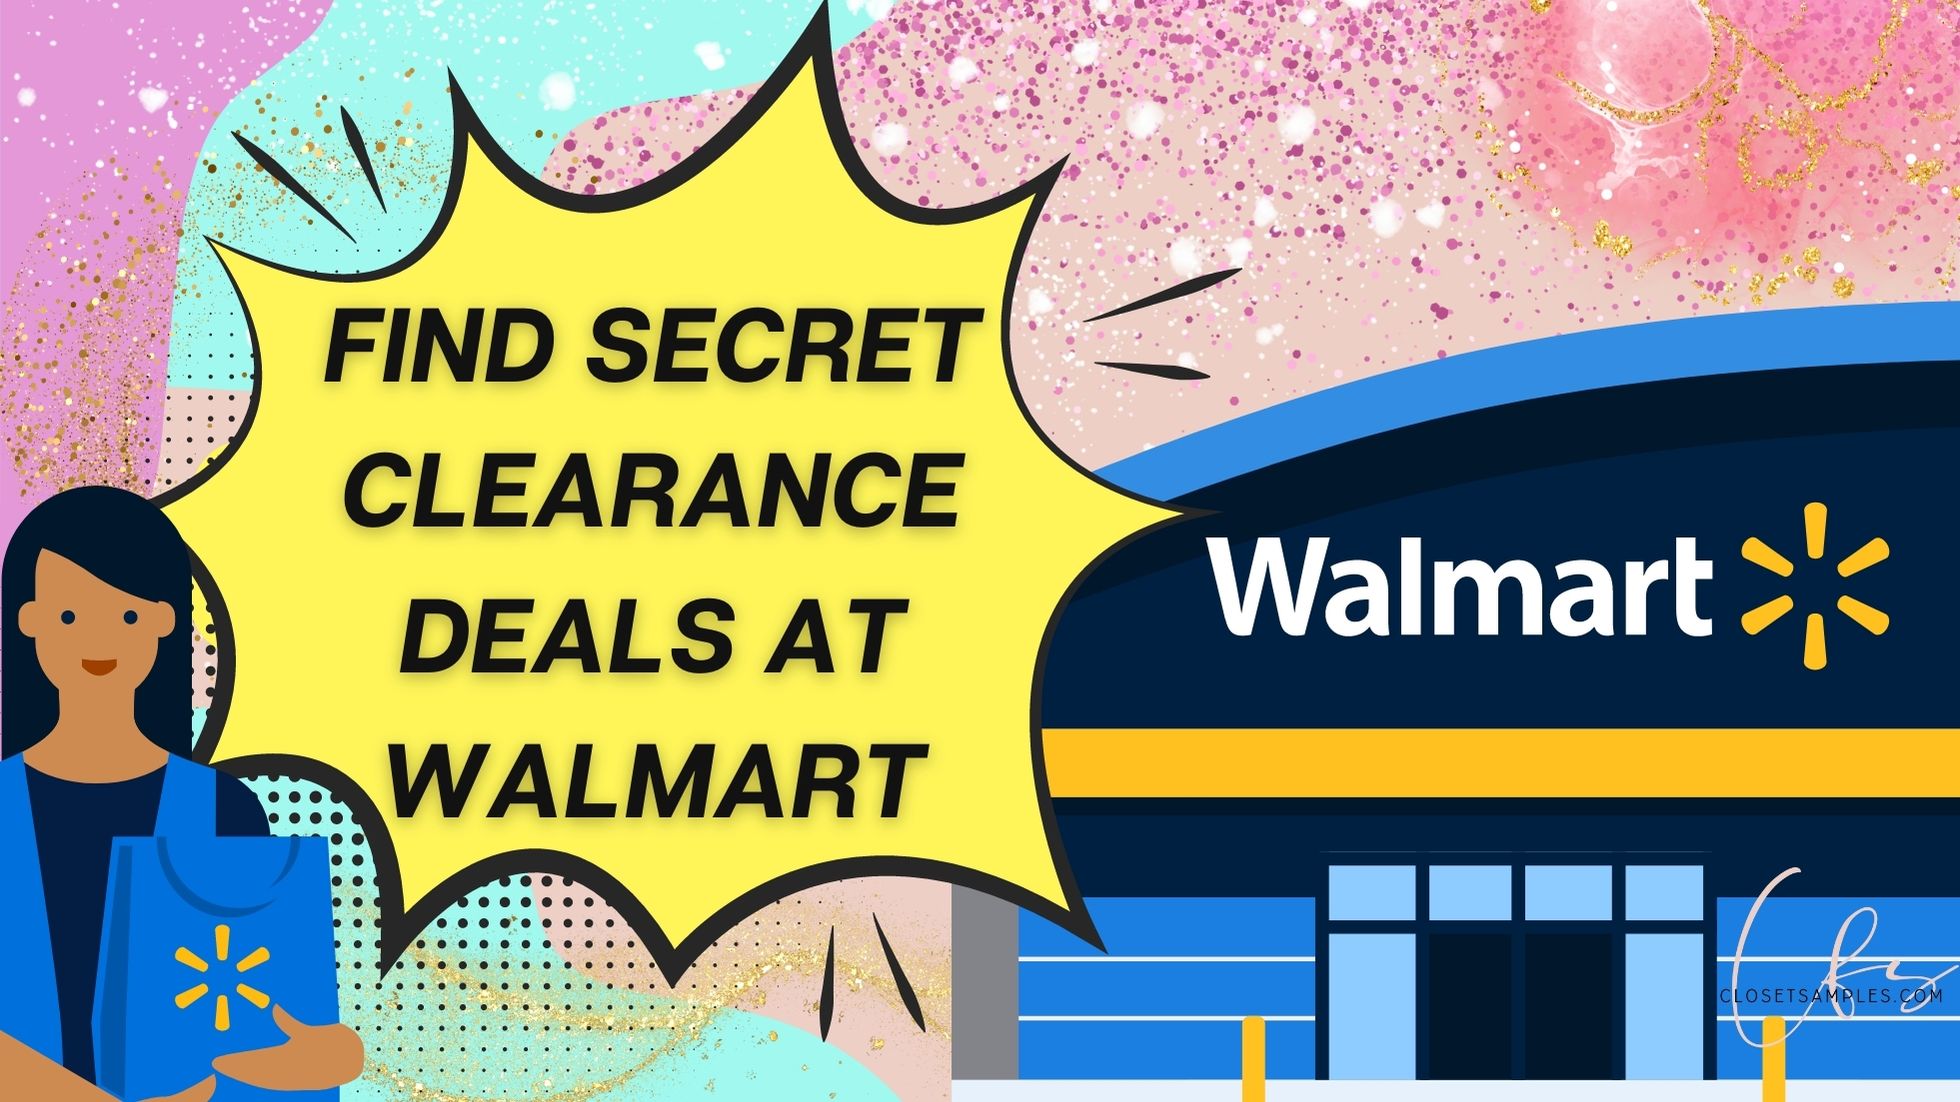 Find Secret Clearance Deals at...